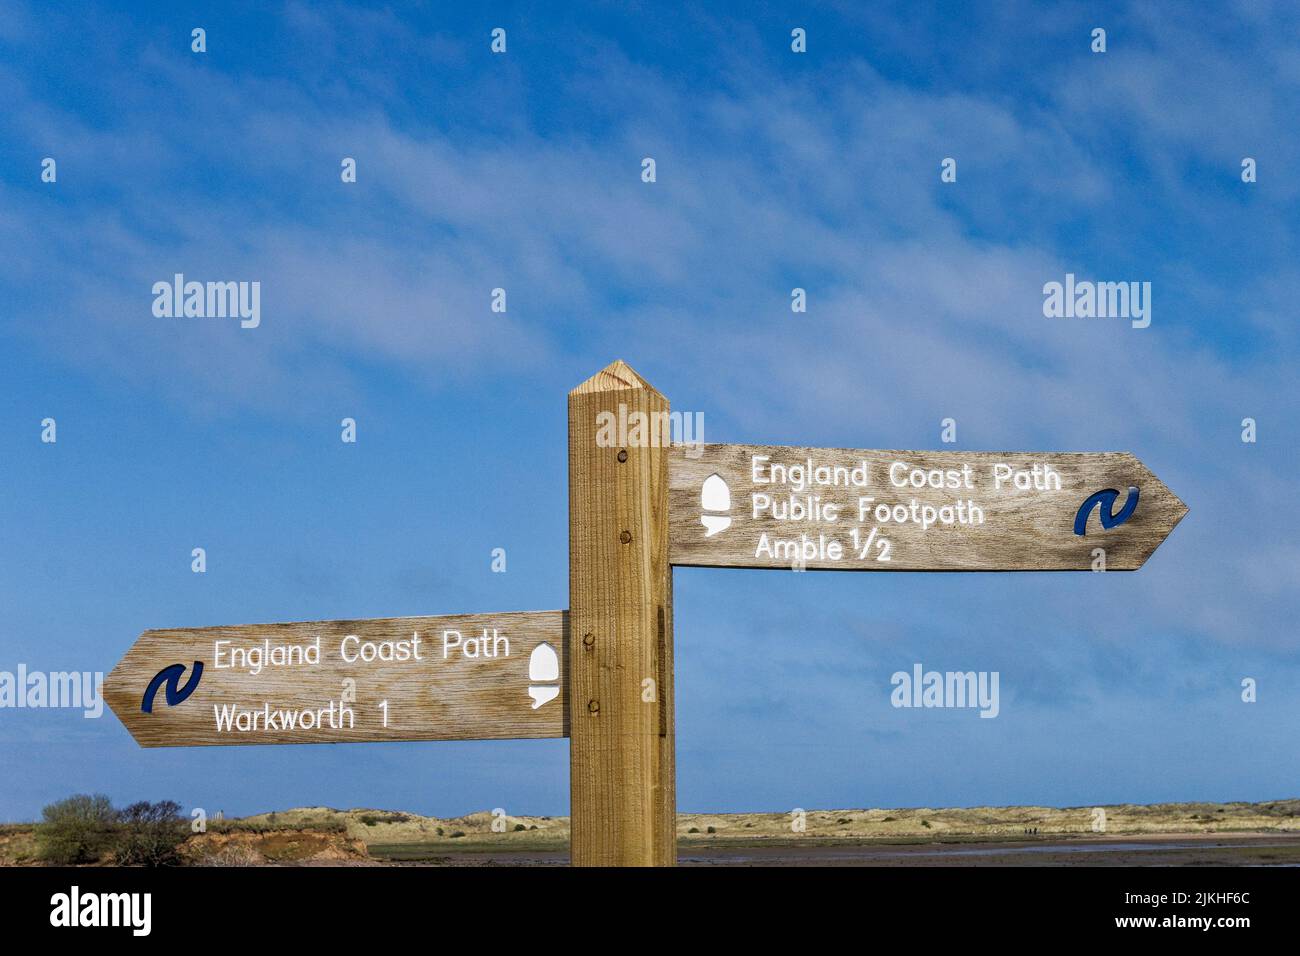 Signpost showing the England Coast Path between Amble and Warkworth in Northumberland, UK Stock Photo